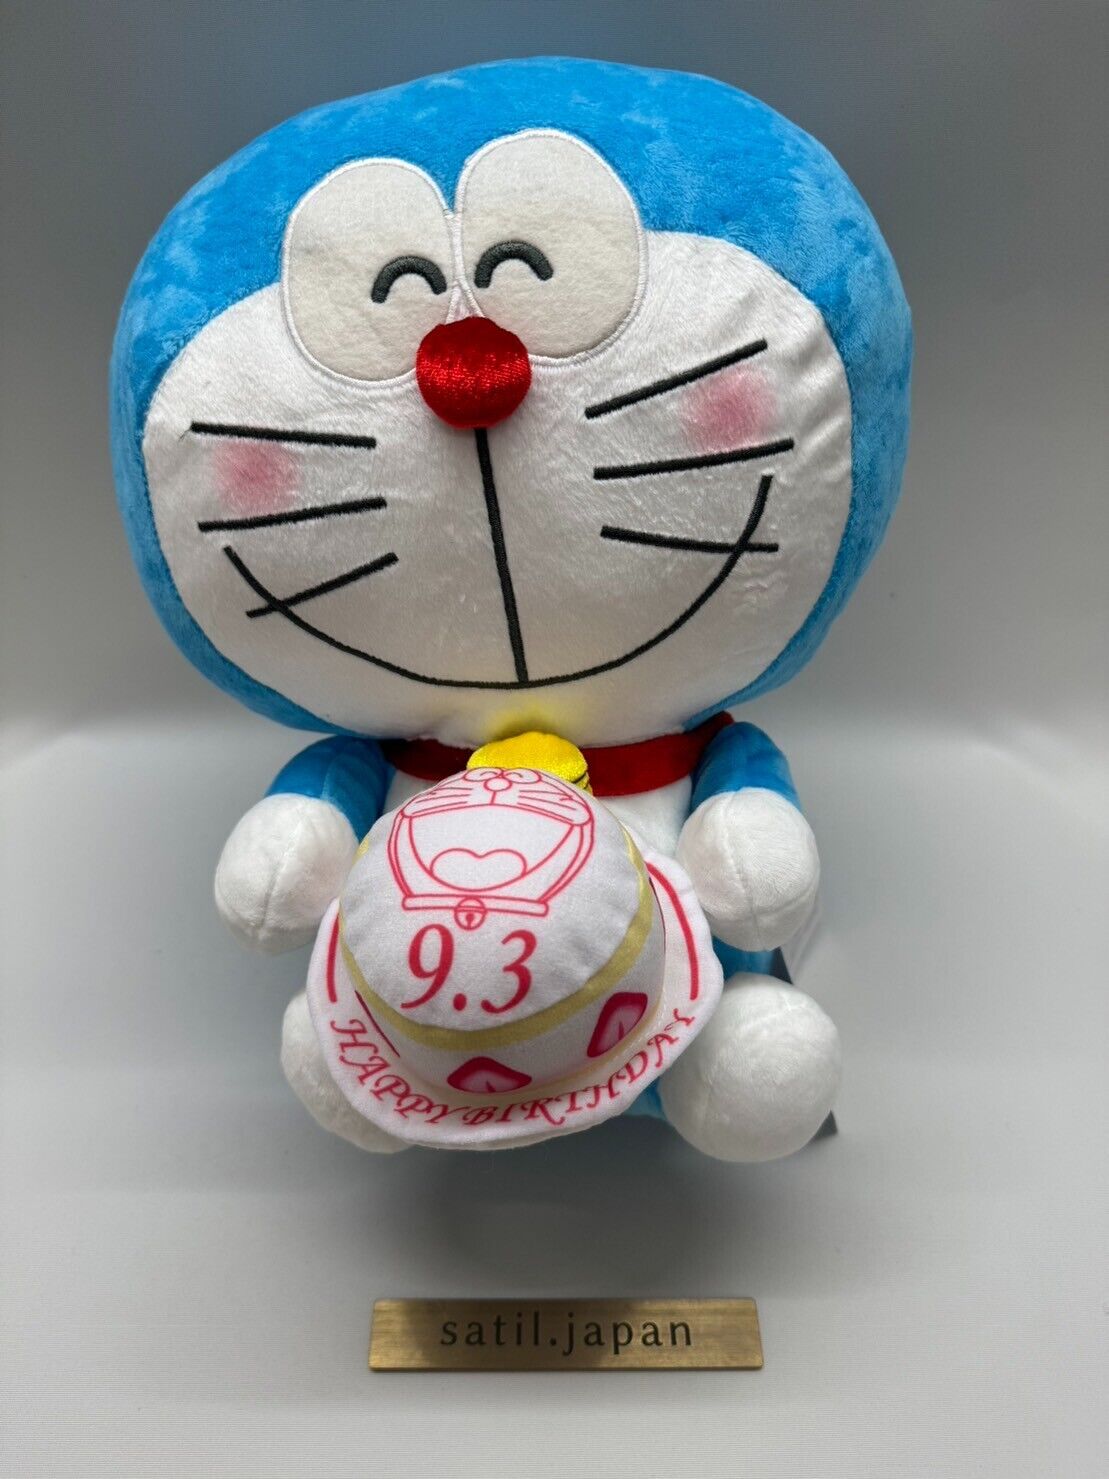 Doraemon birthday cake BIG Plush Doll